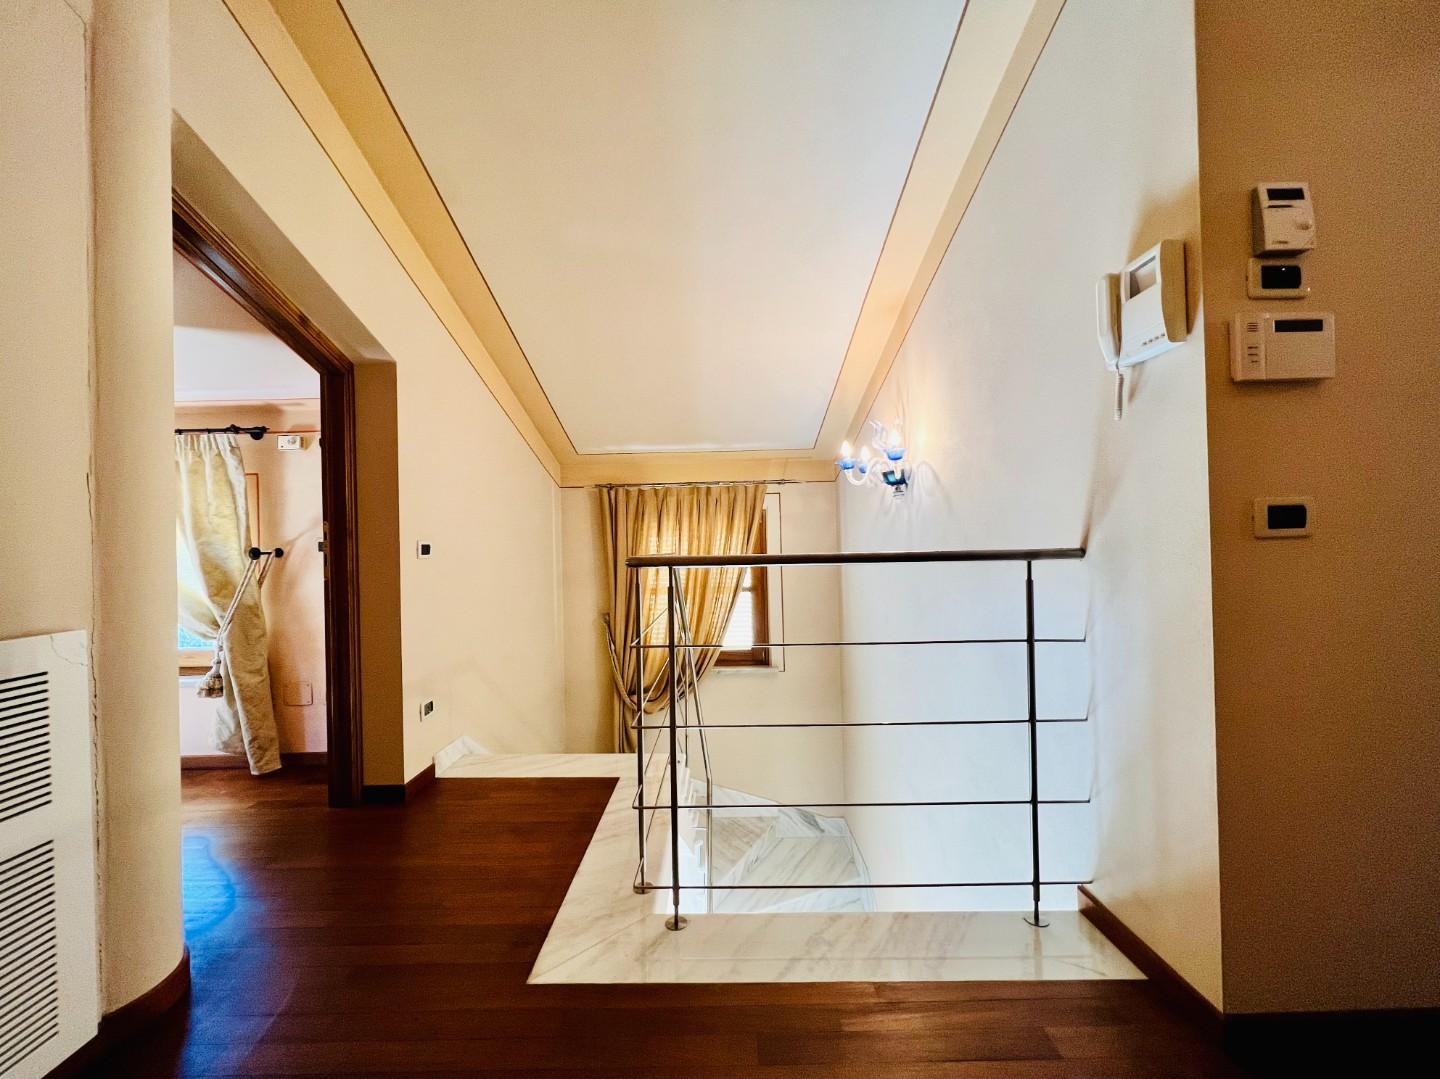 Villa singola in vendita - Marina Di Pietrasanta, Pietrasanta